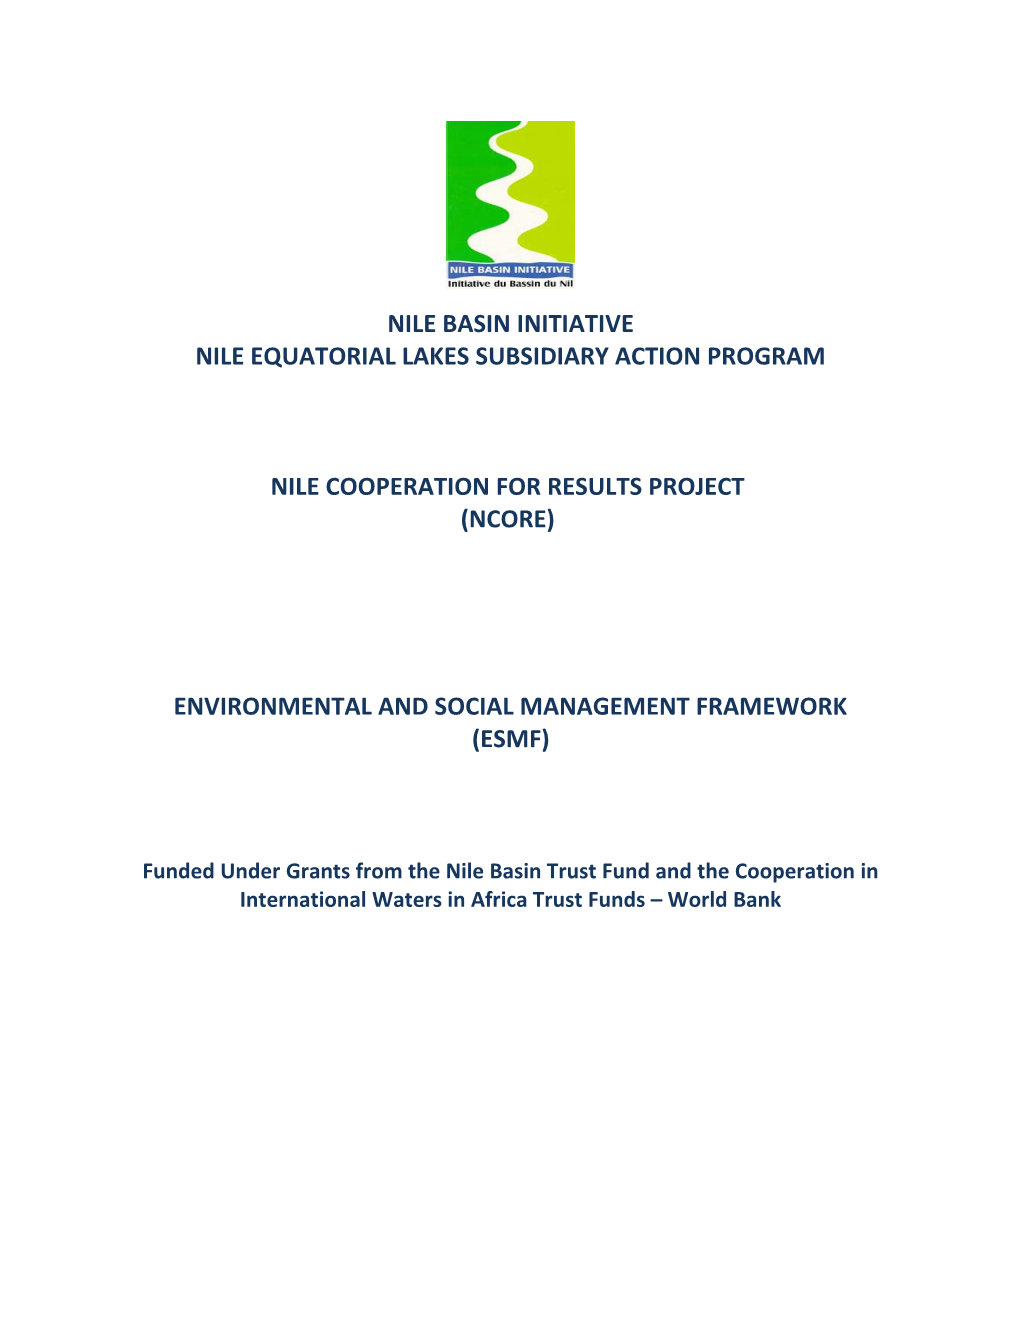 Nile Equatorial Lakes Subsidiary Action Program